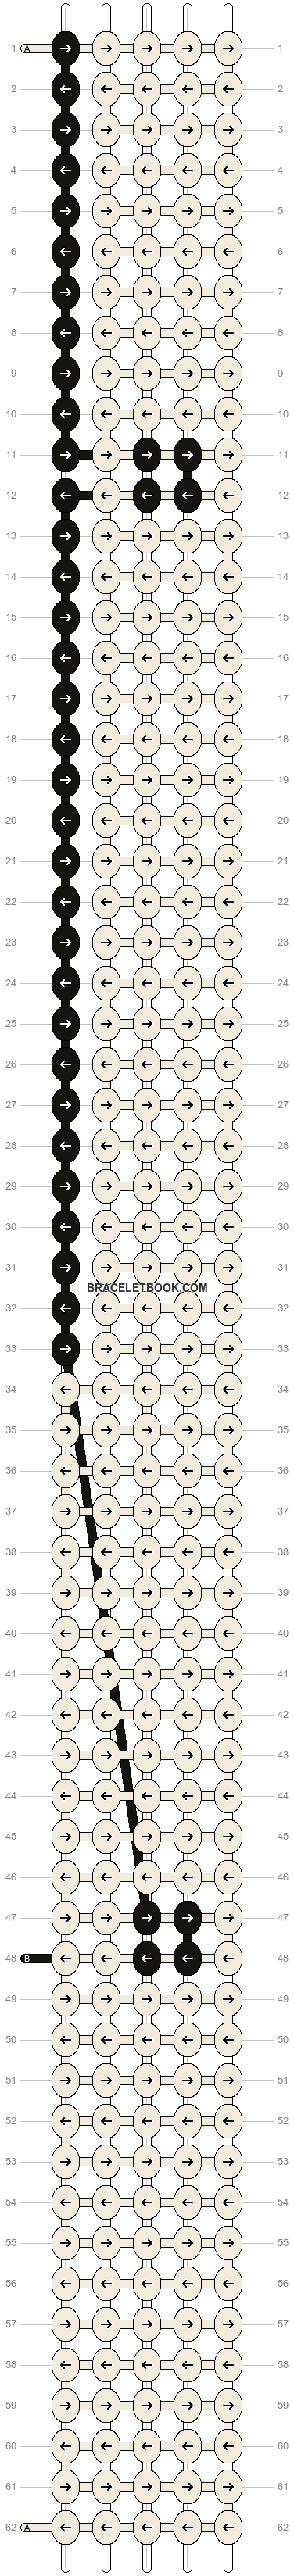 Alpha pattern #935 pattern